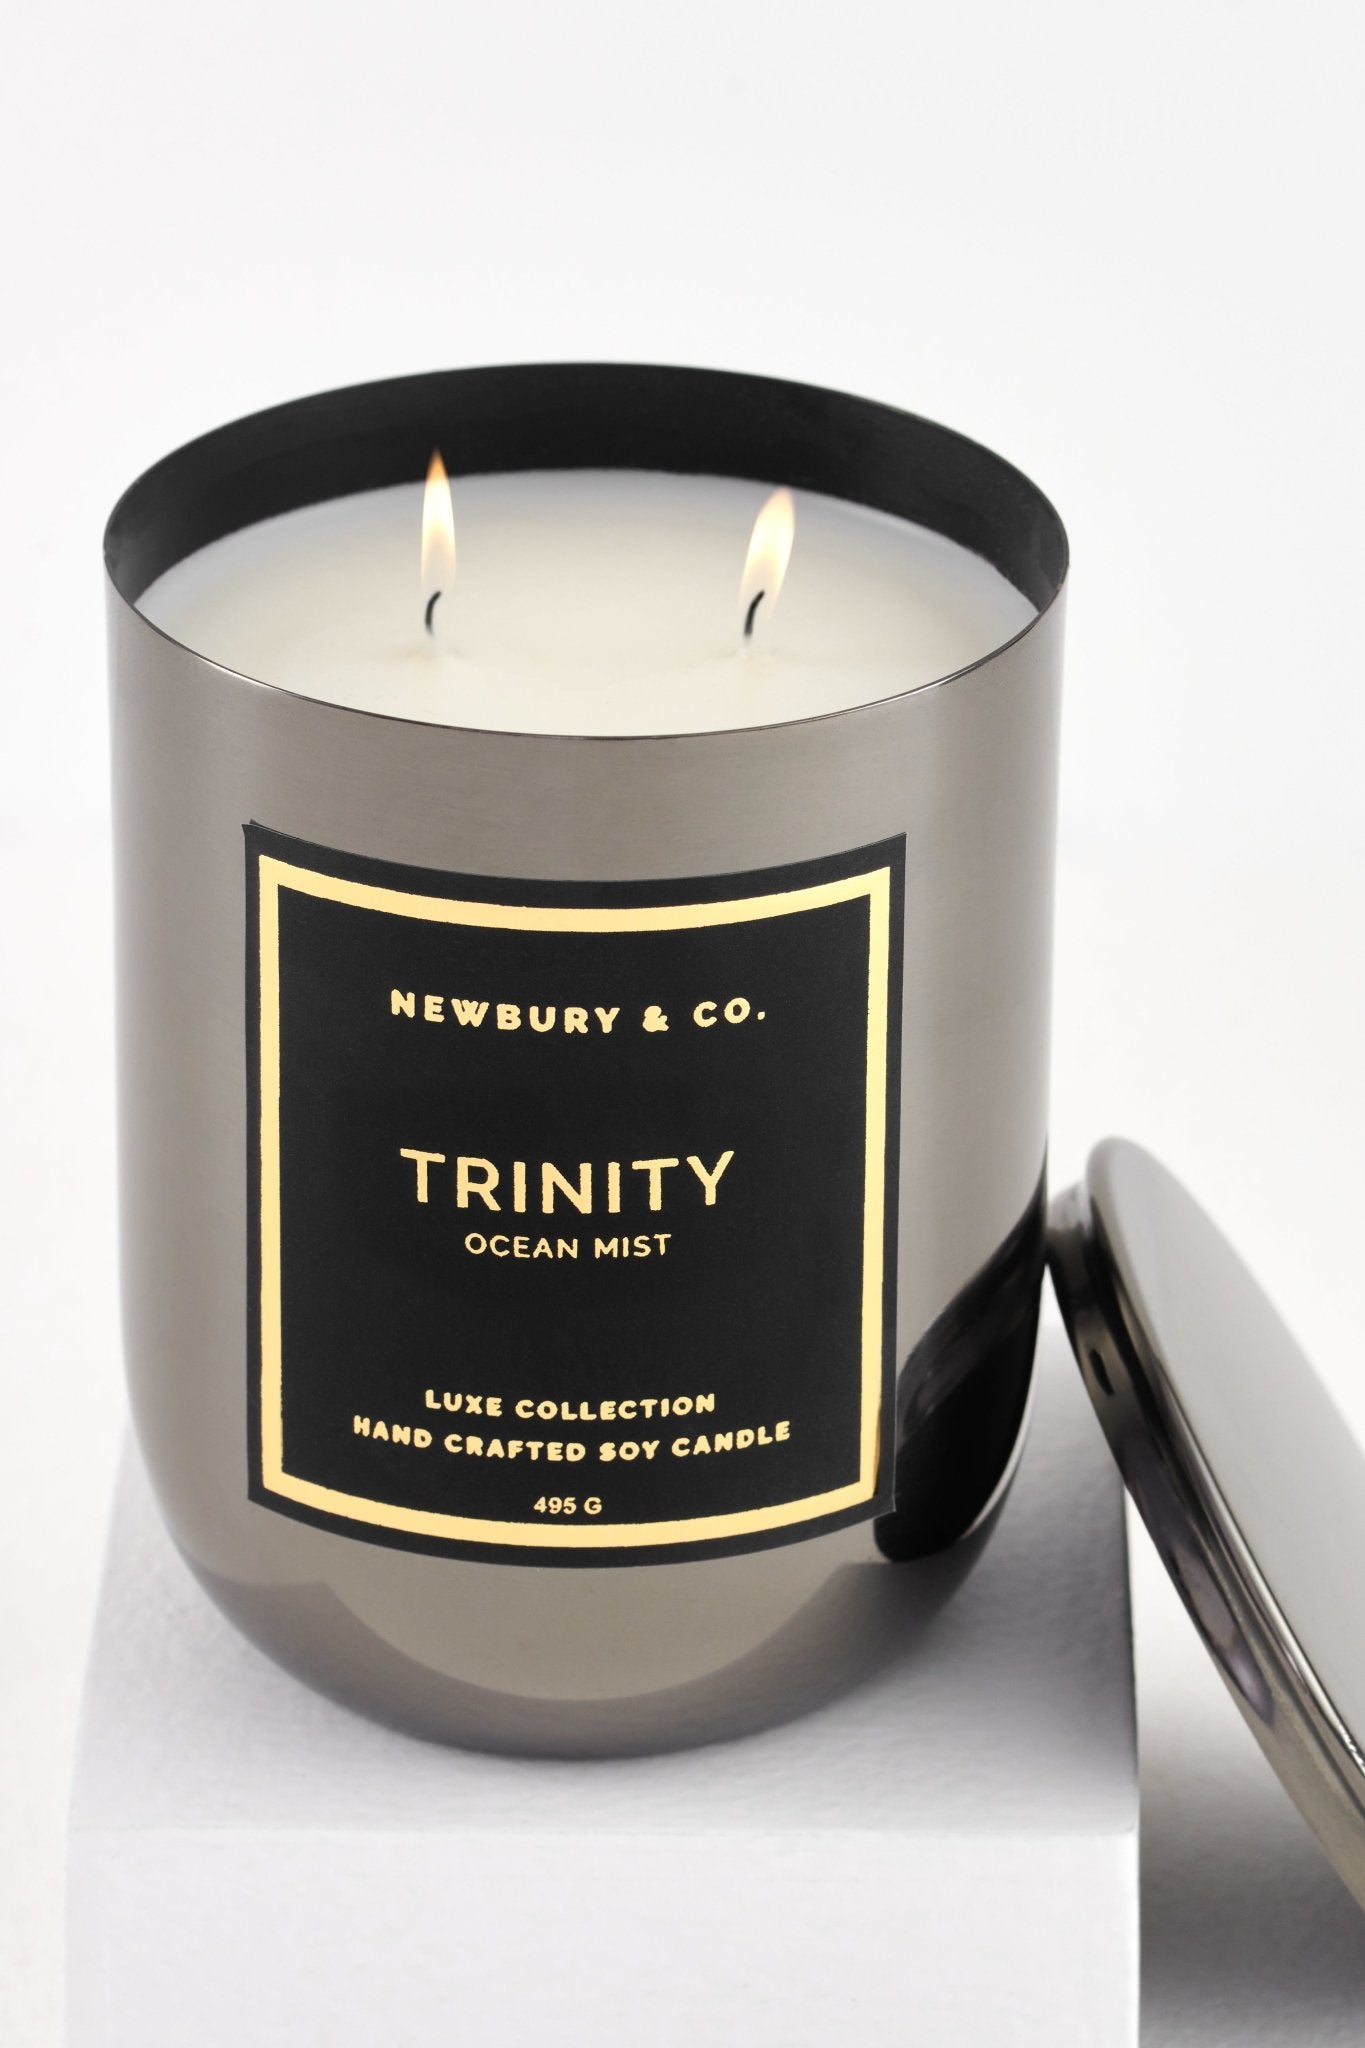 TRINITY | Ocean Mist - Newbury & Co.